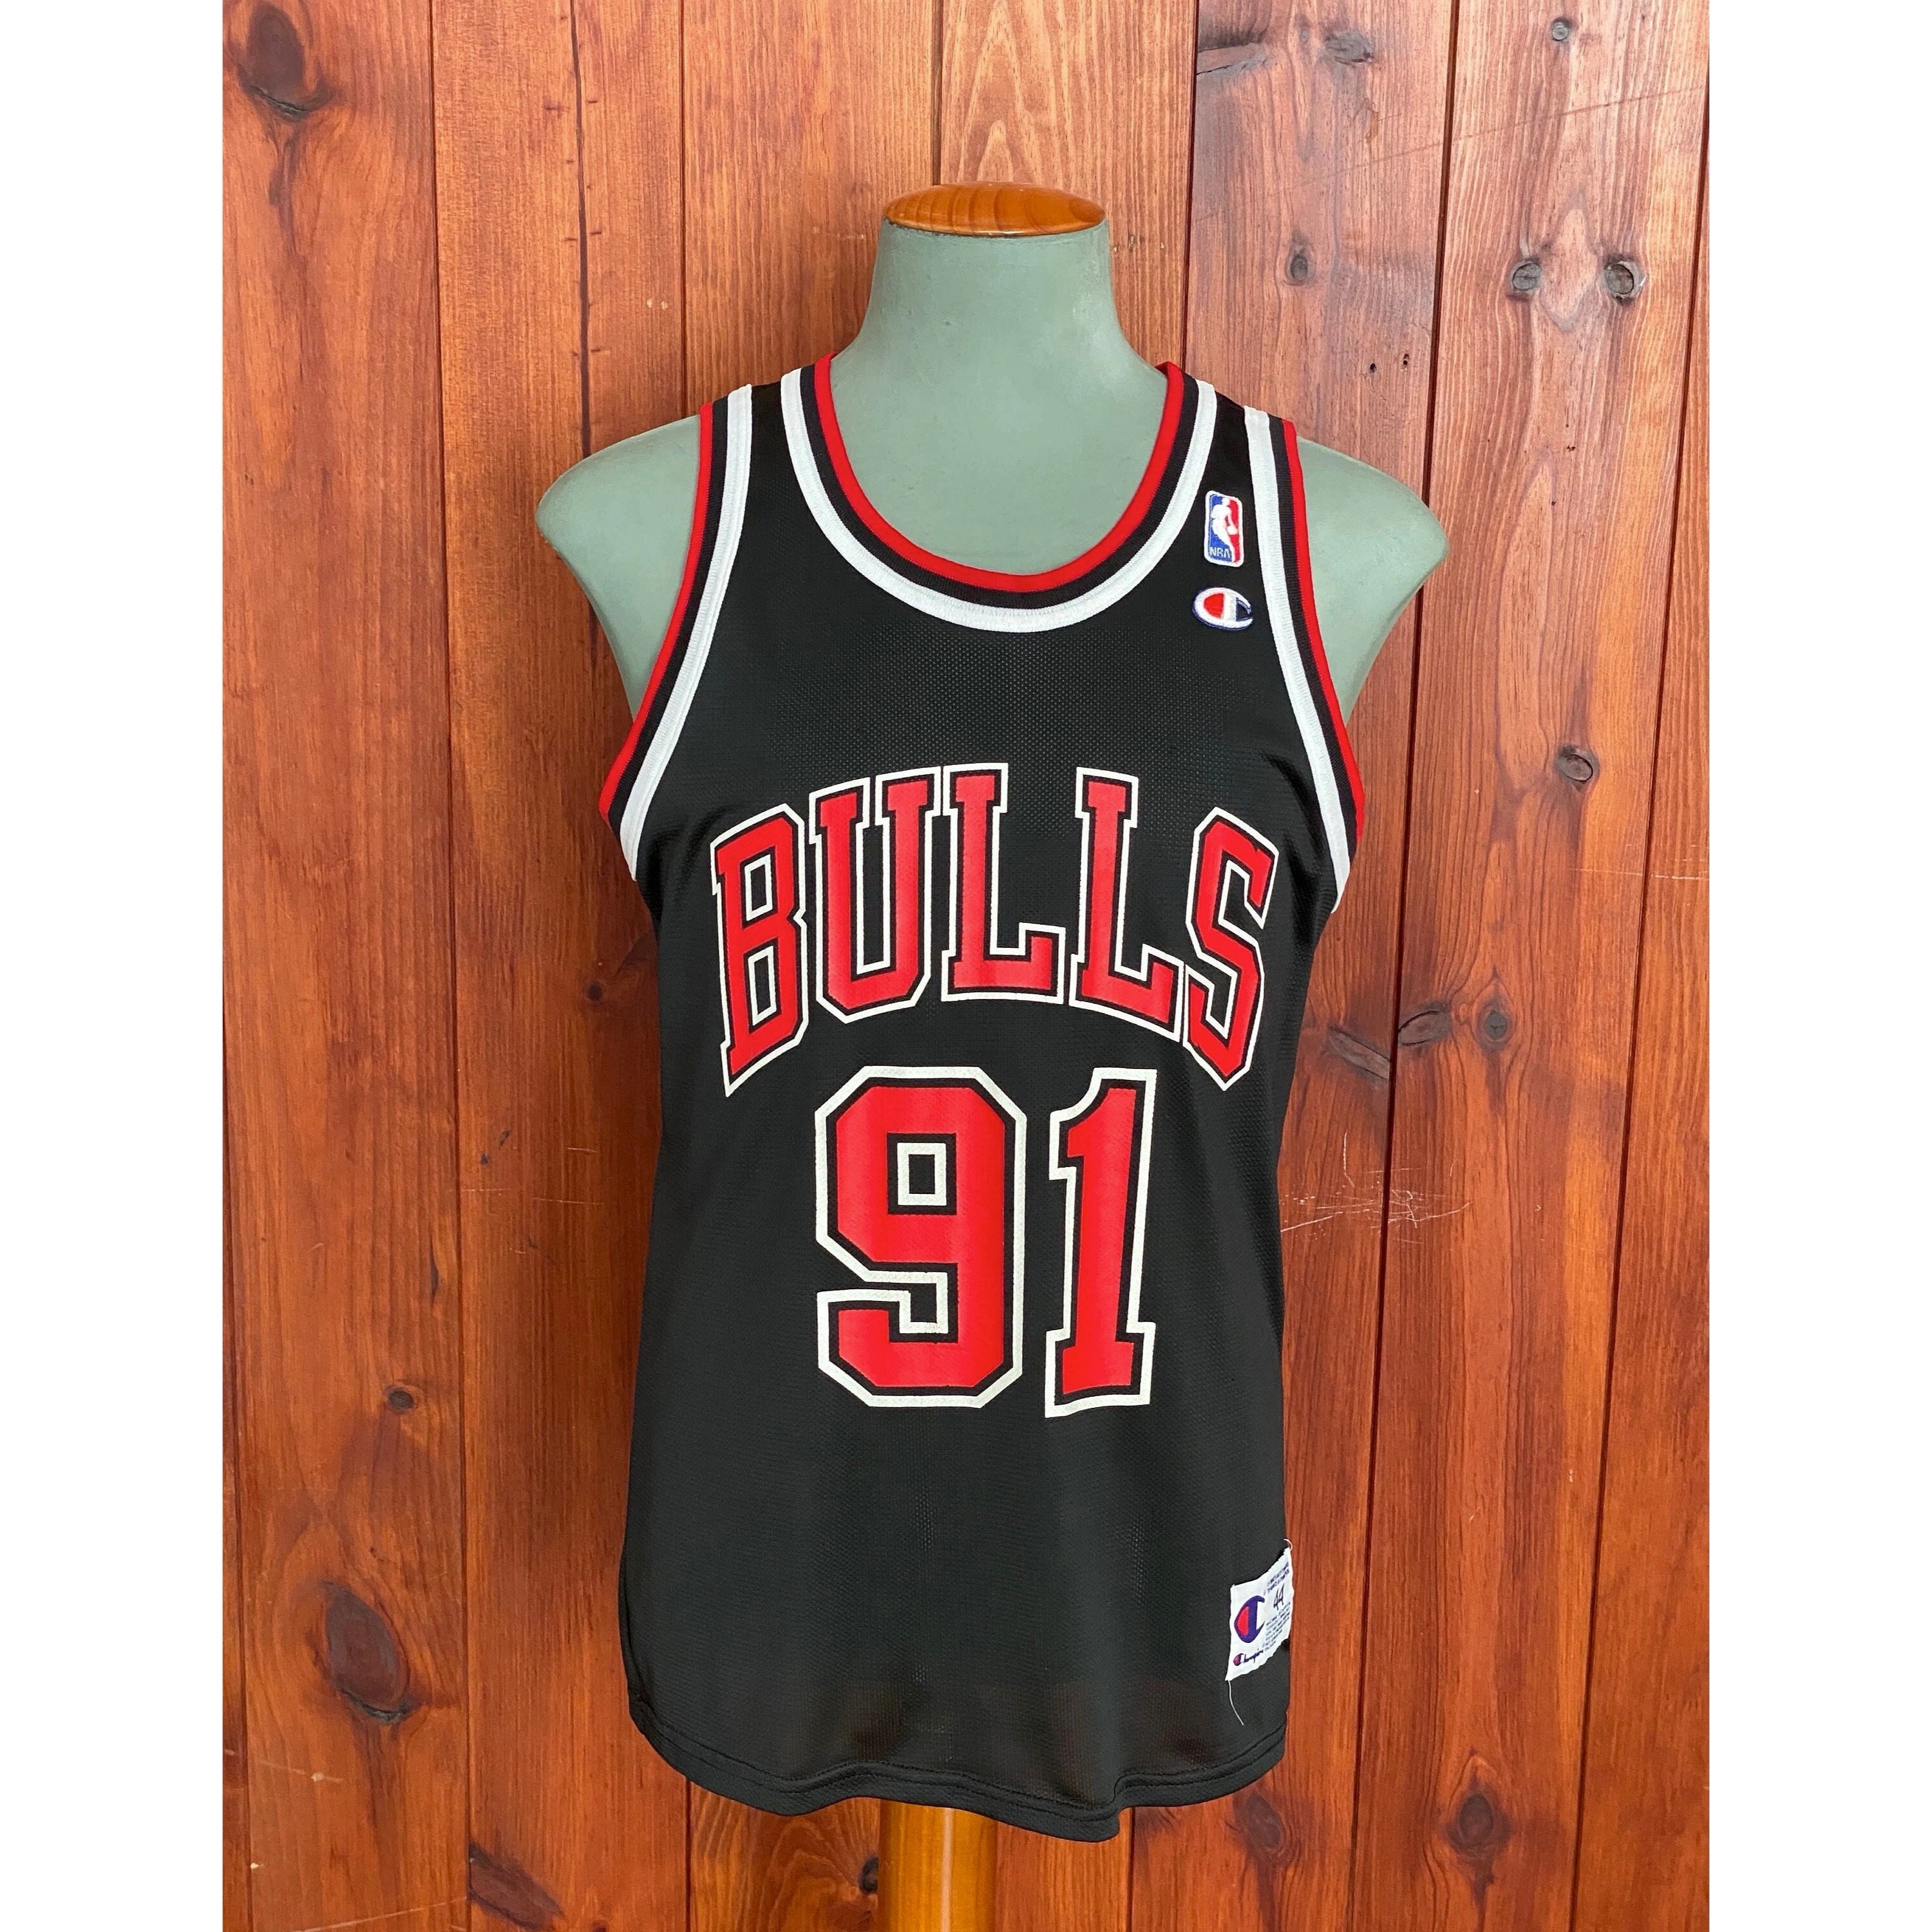 Size 44. 90s Vintage Chicago Bulls Dennis Rodman 91 NBA -  Singapore